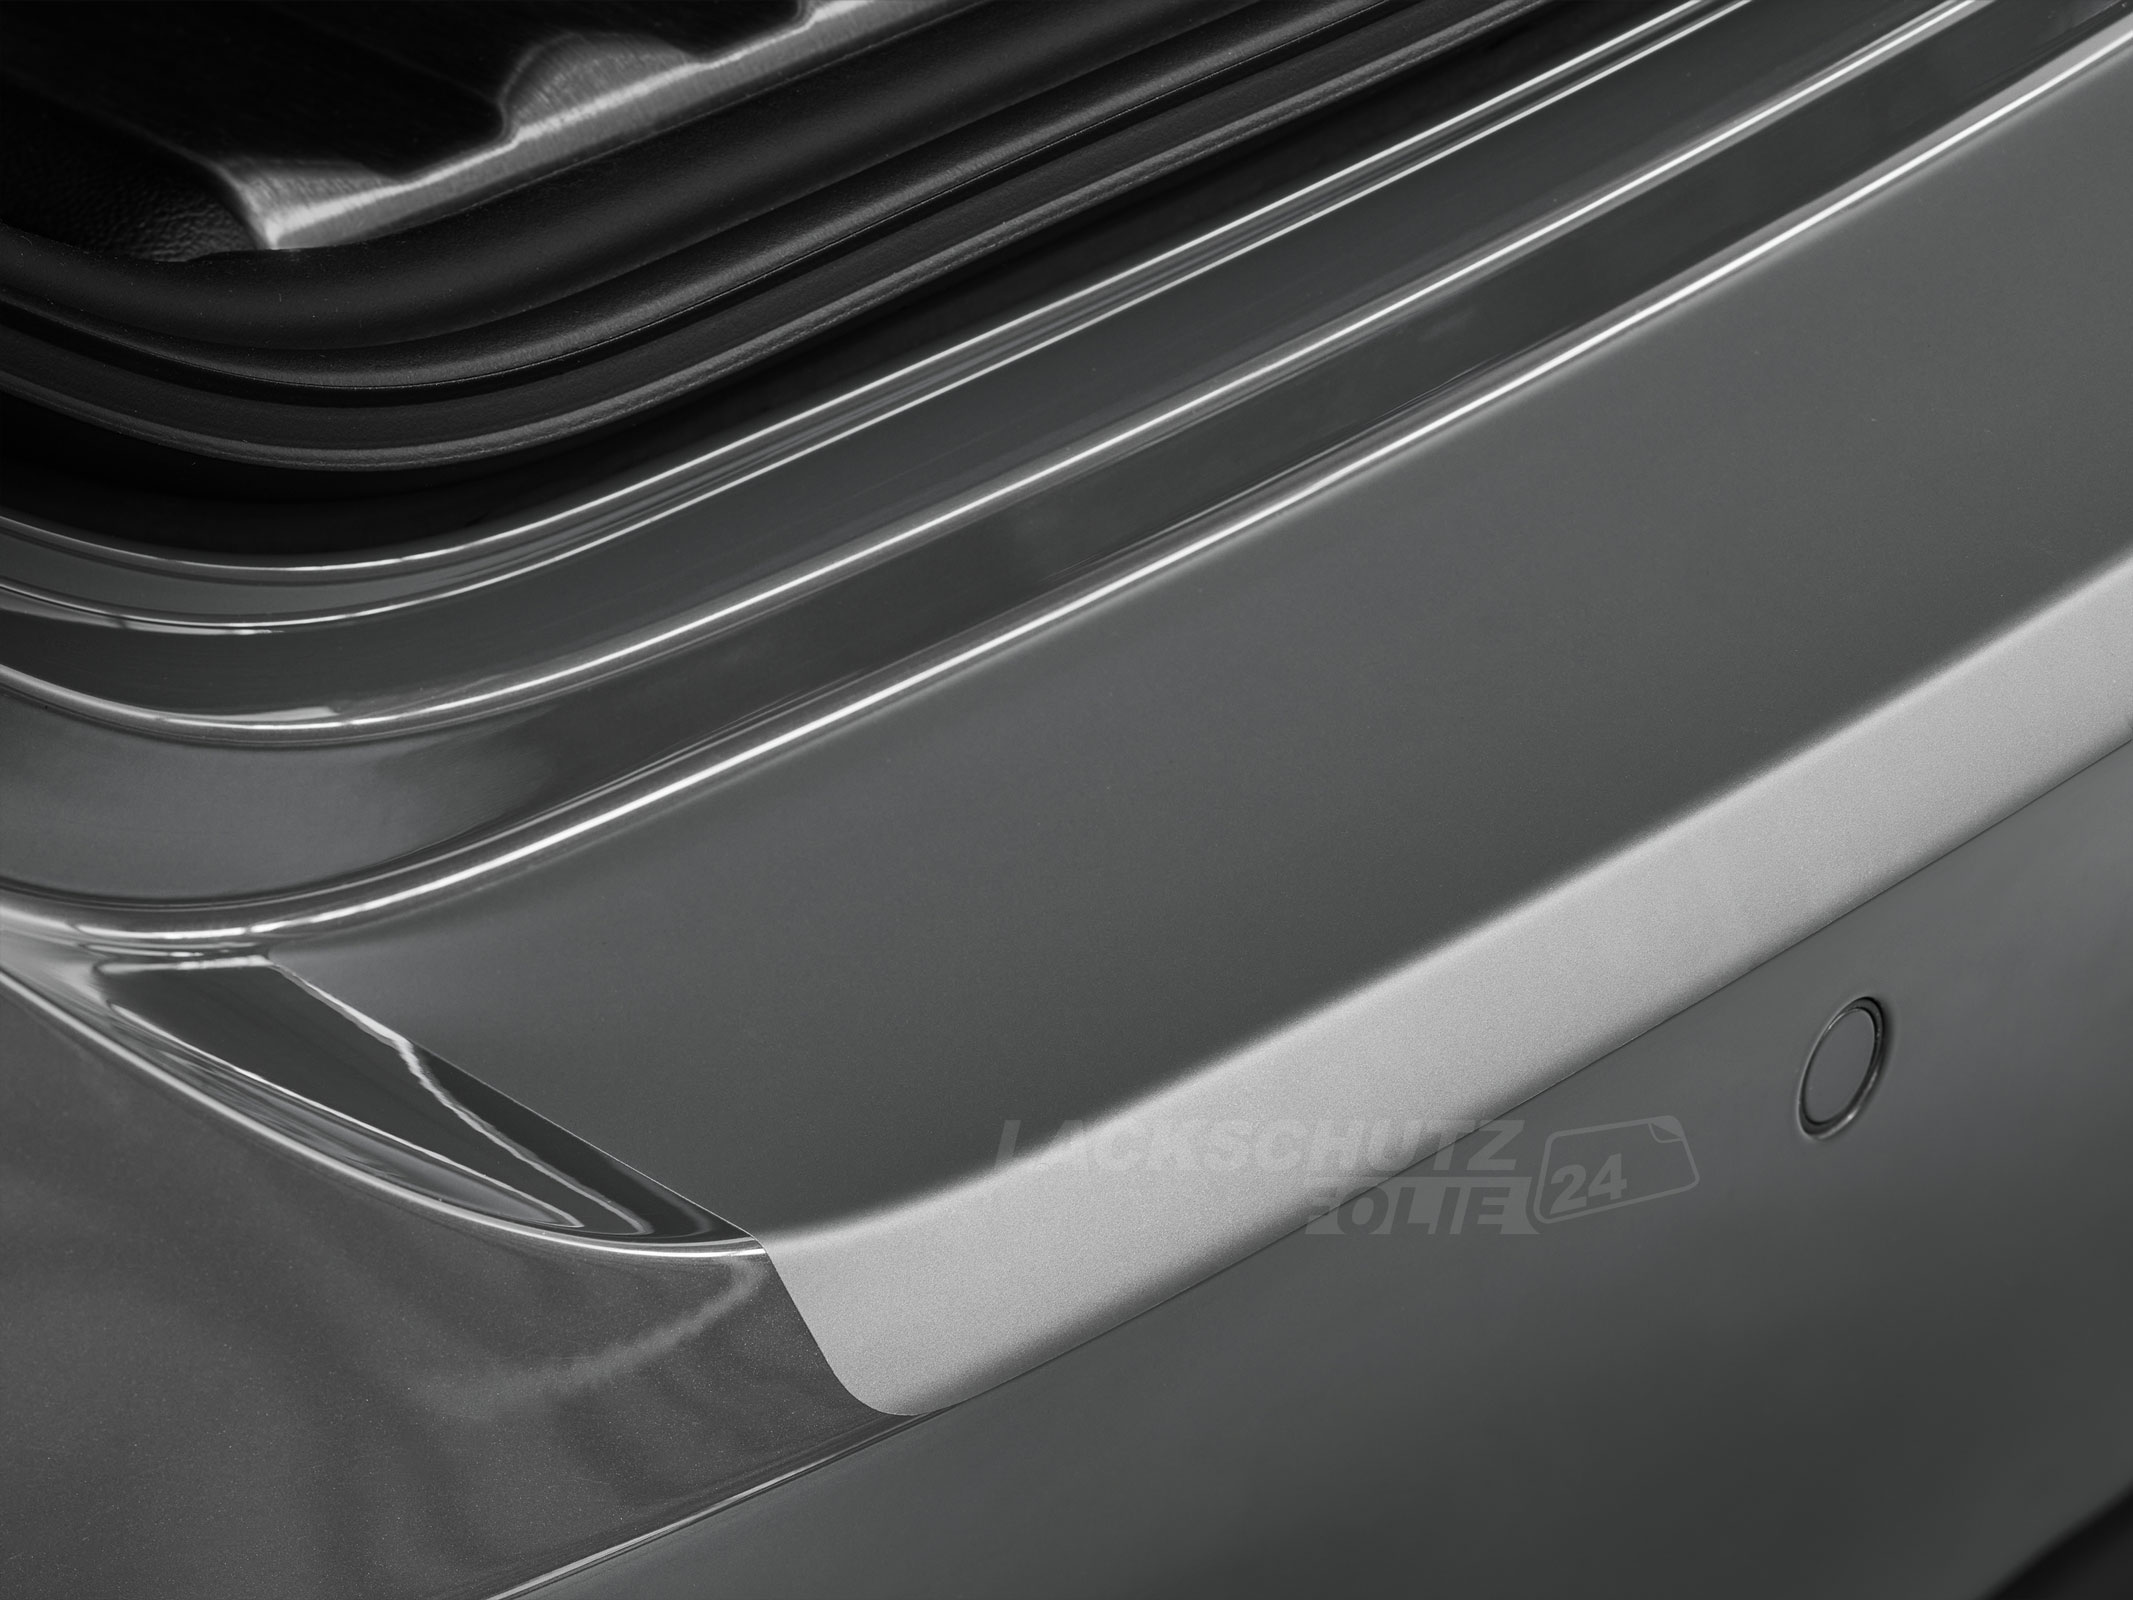 Ladekantenschutzfolie - Transparent Glatt MATT 110 µm stark  für Hyundai Santa Fe Typ TM, BJ 08/2018-10/2020